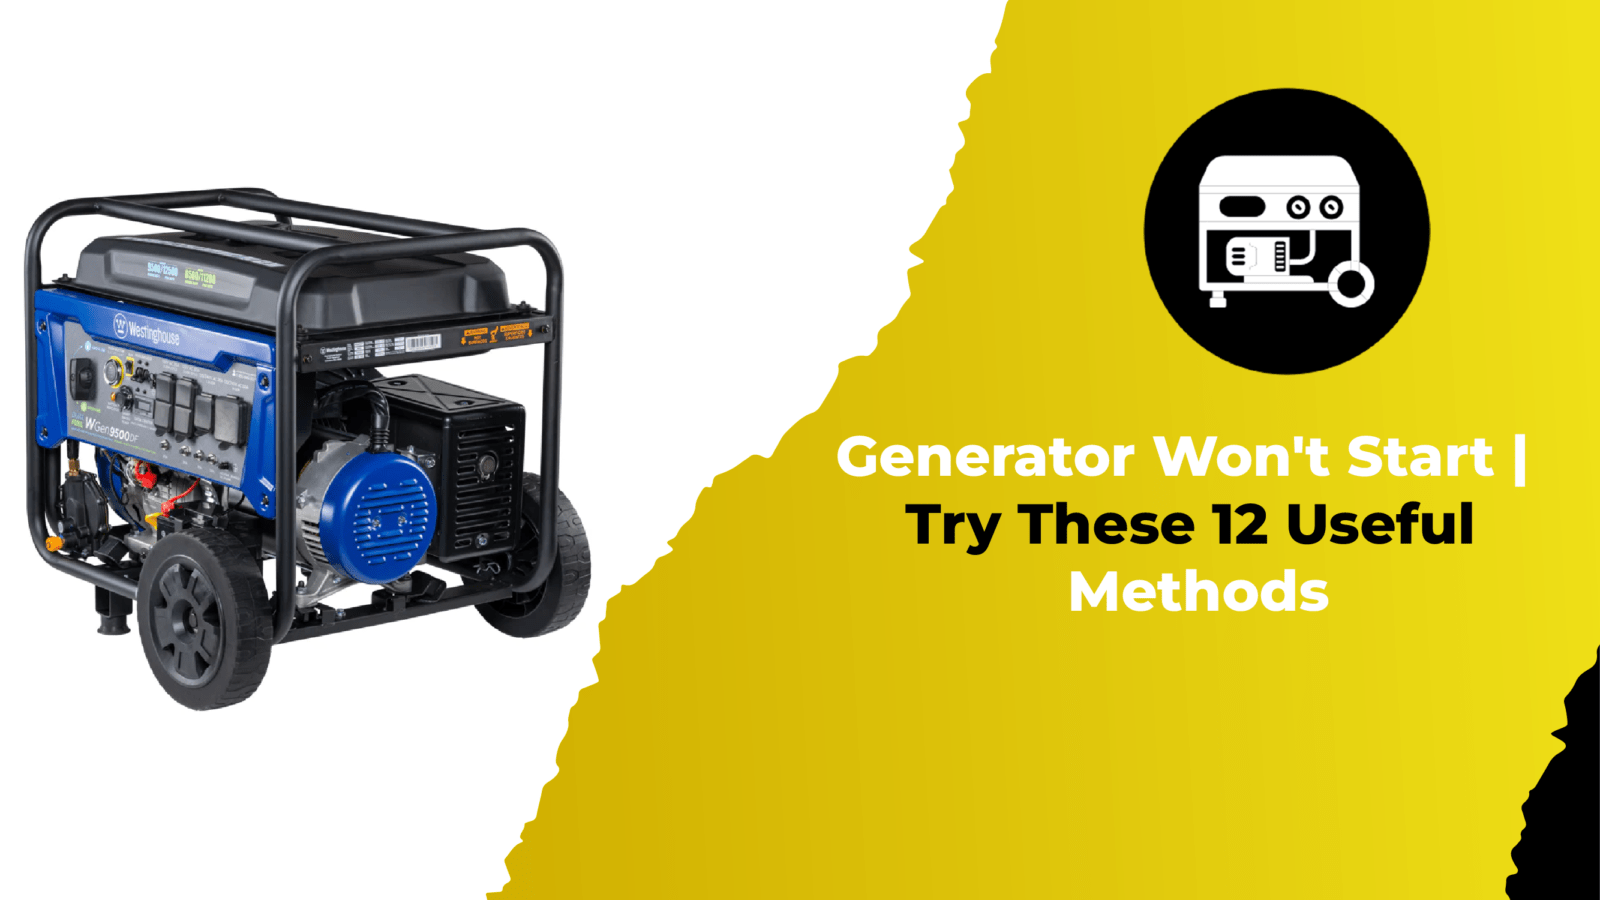 Generator Won't Start Try These 12 Useful Methods